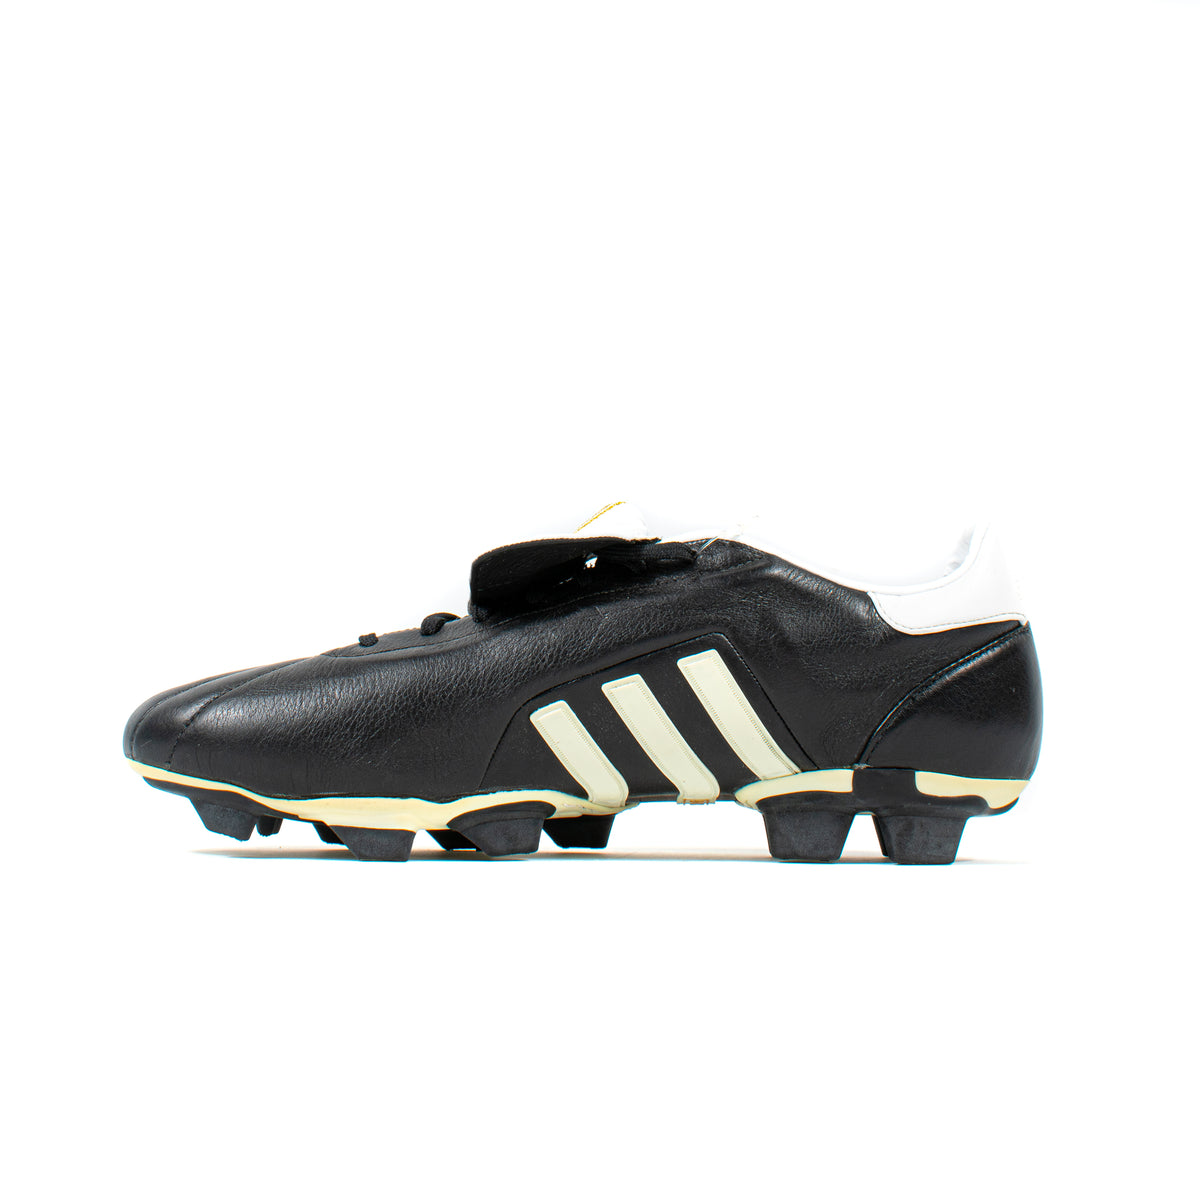 Adidas 7406 Black White FG – Soccer Cleats